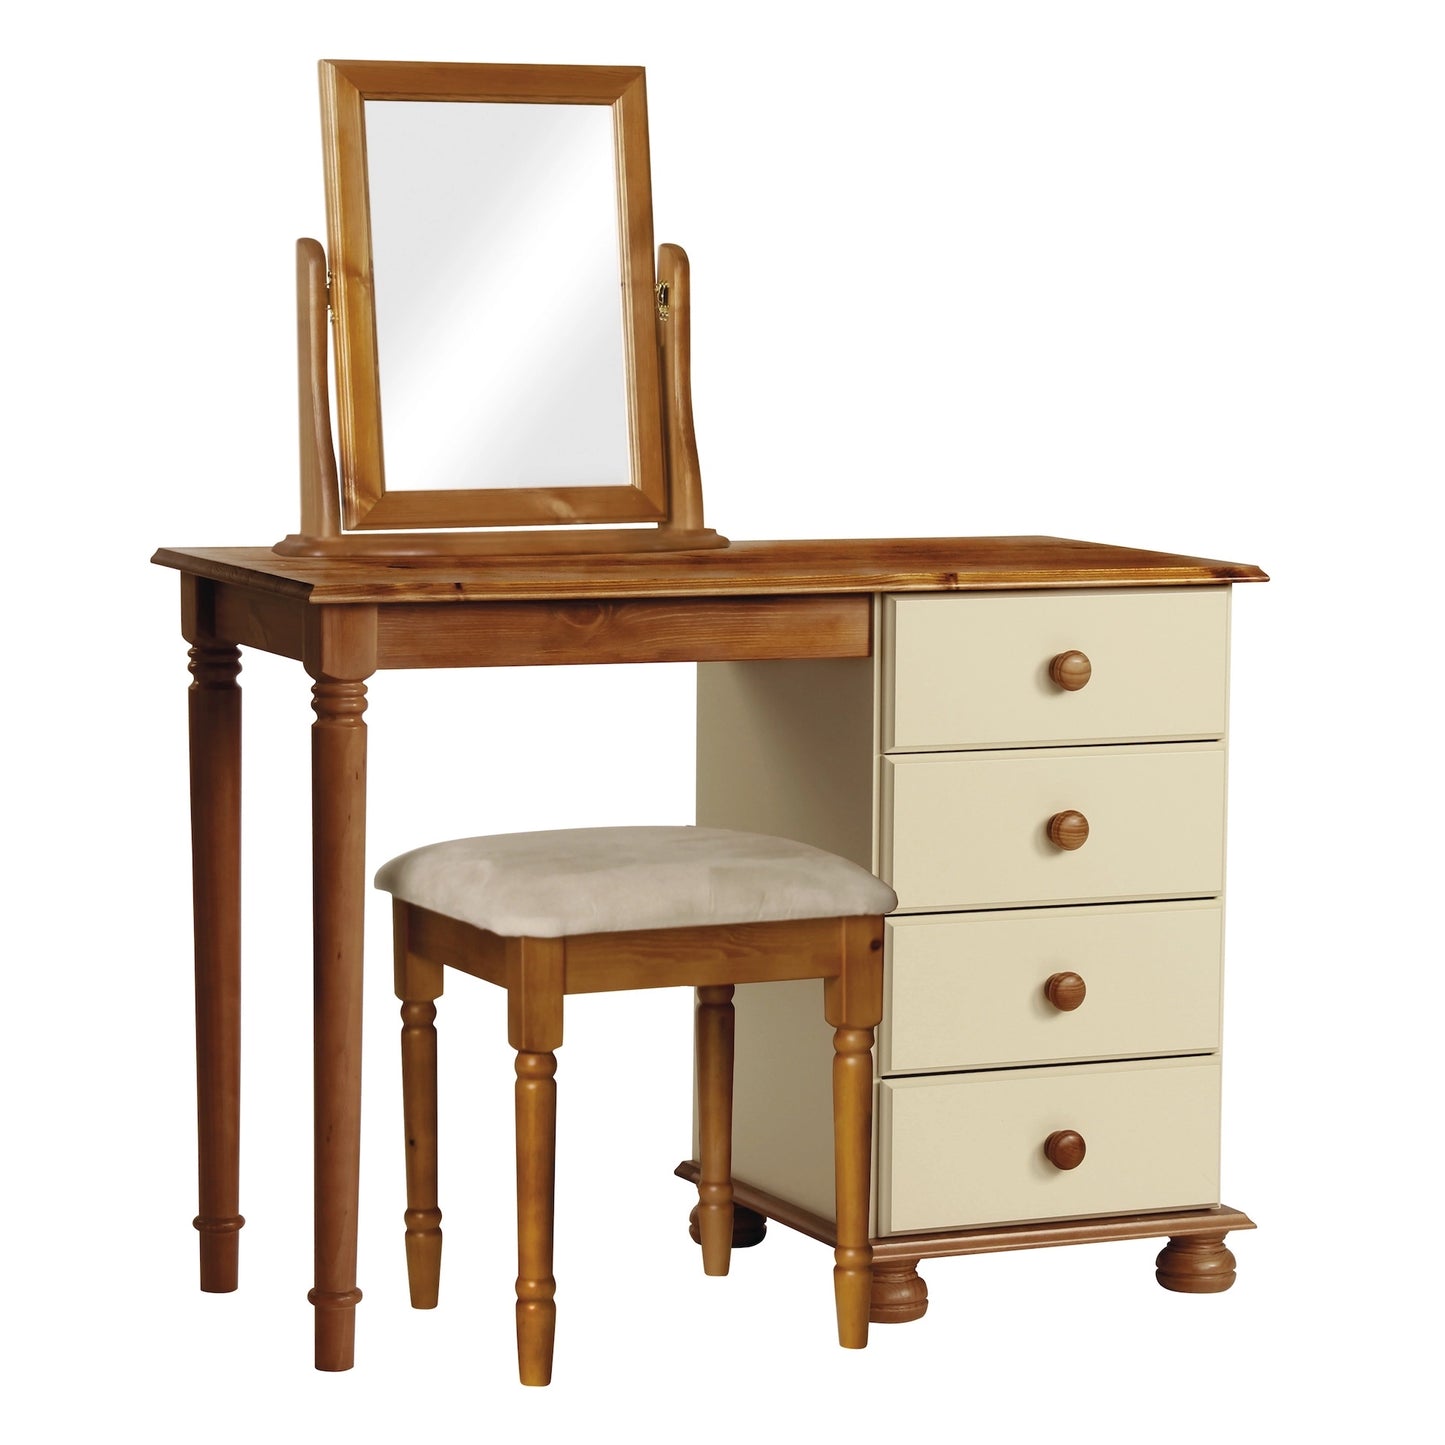 Furniture To Go Copenhagen Single Dressing Table in Cream/Pine